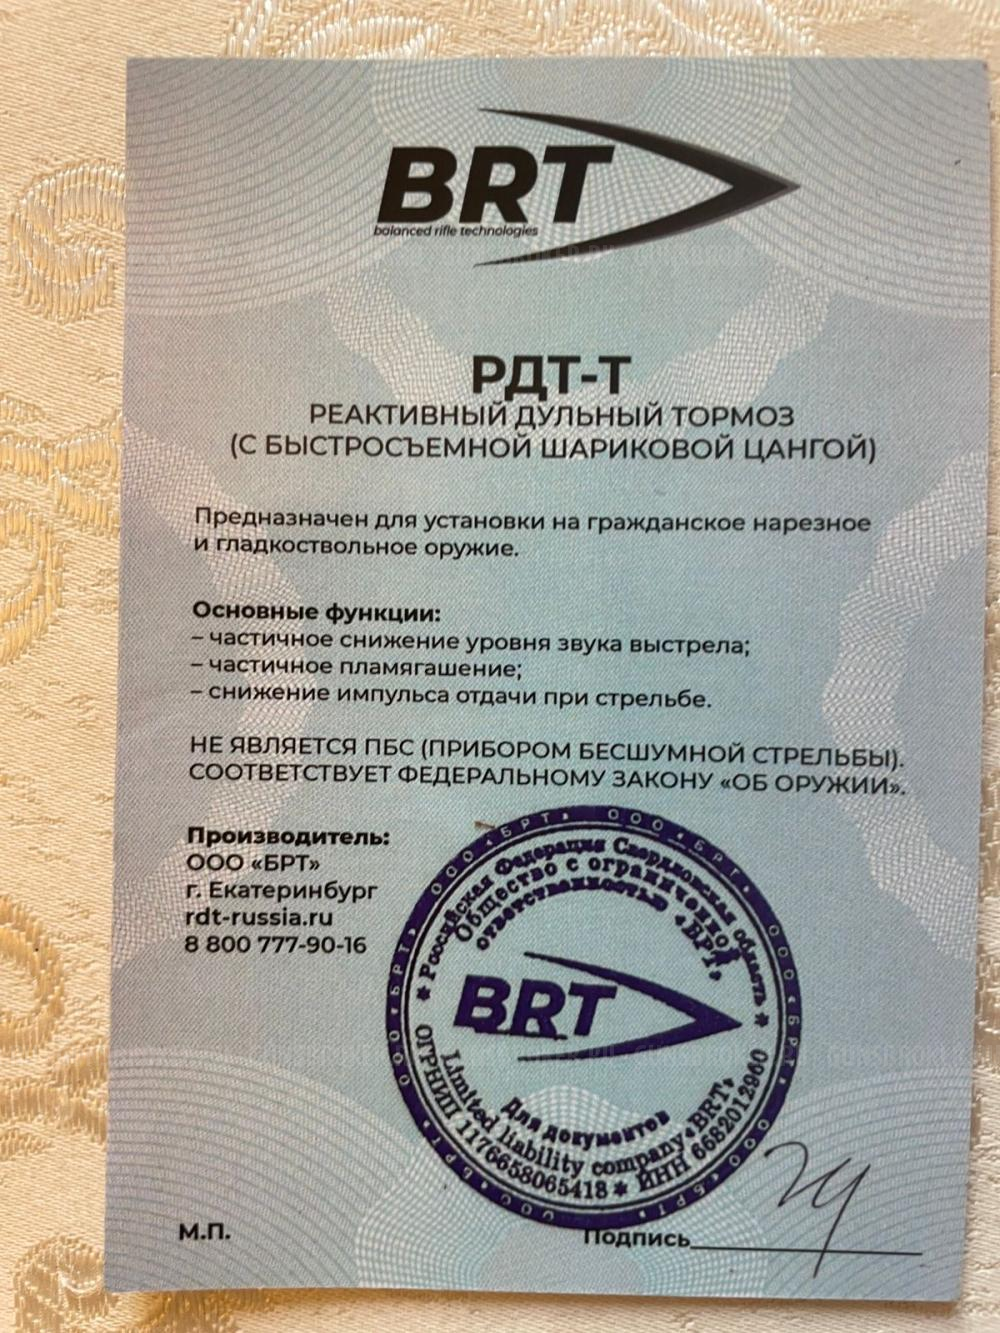 ДТКП BRT закрытого типа (БАНКА)